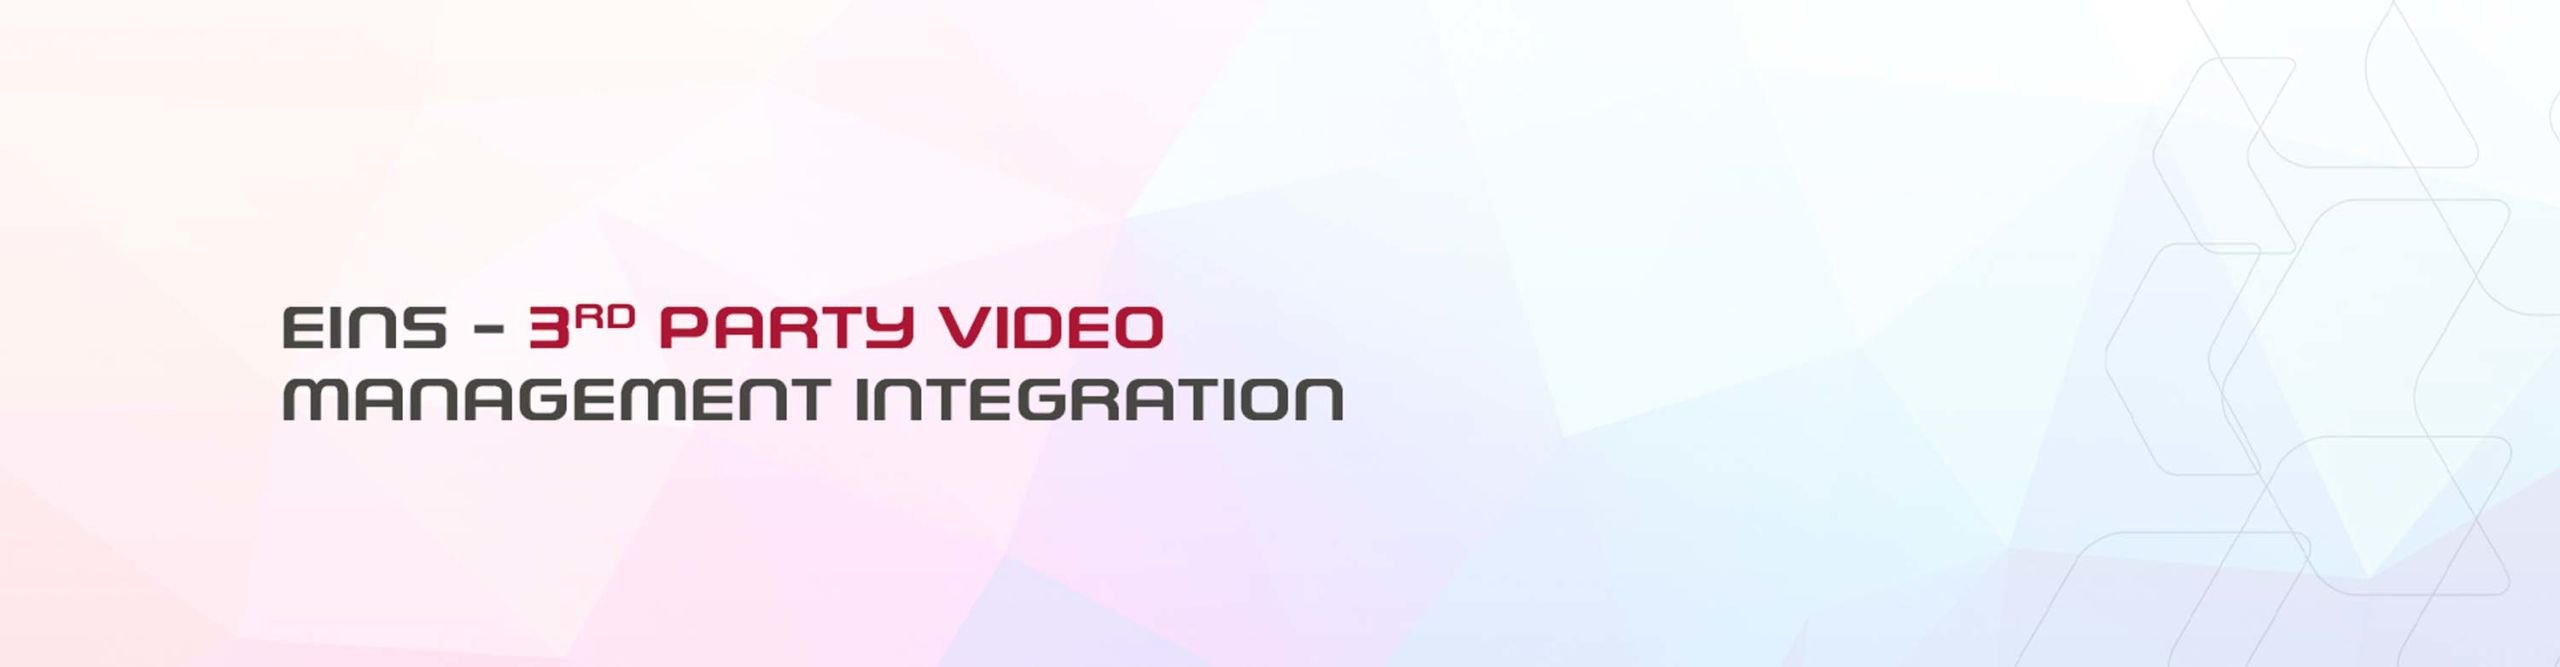 EINS - 3rd party video management integration